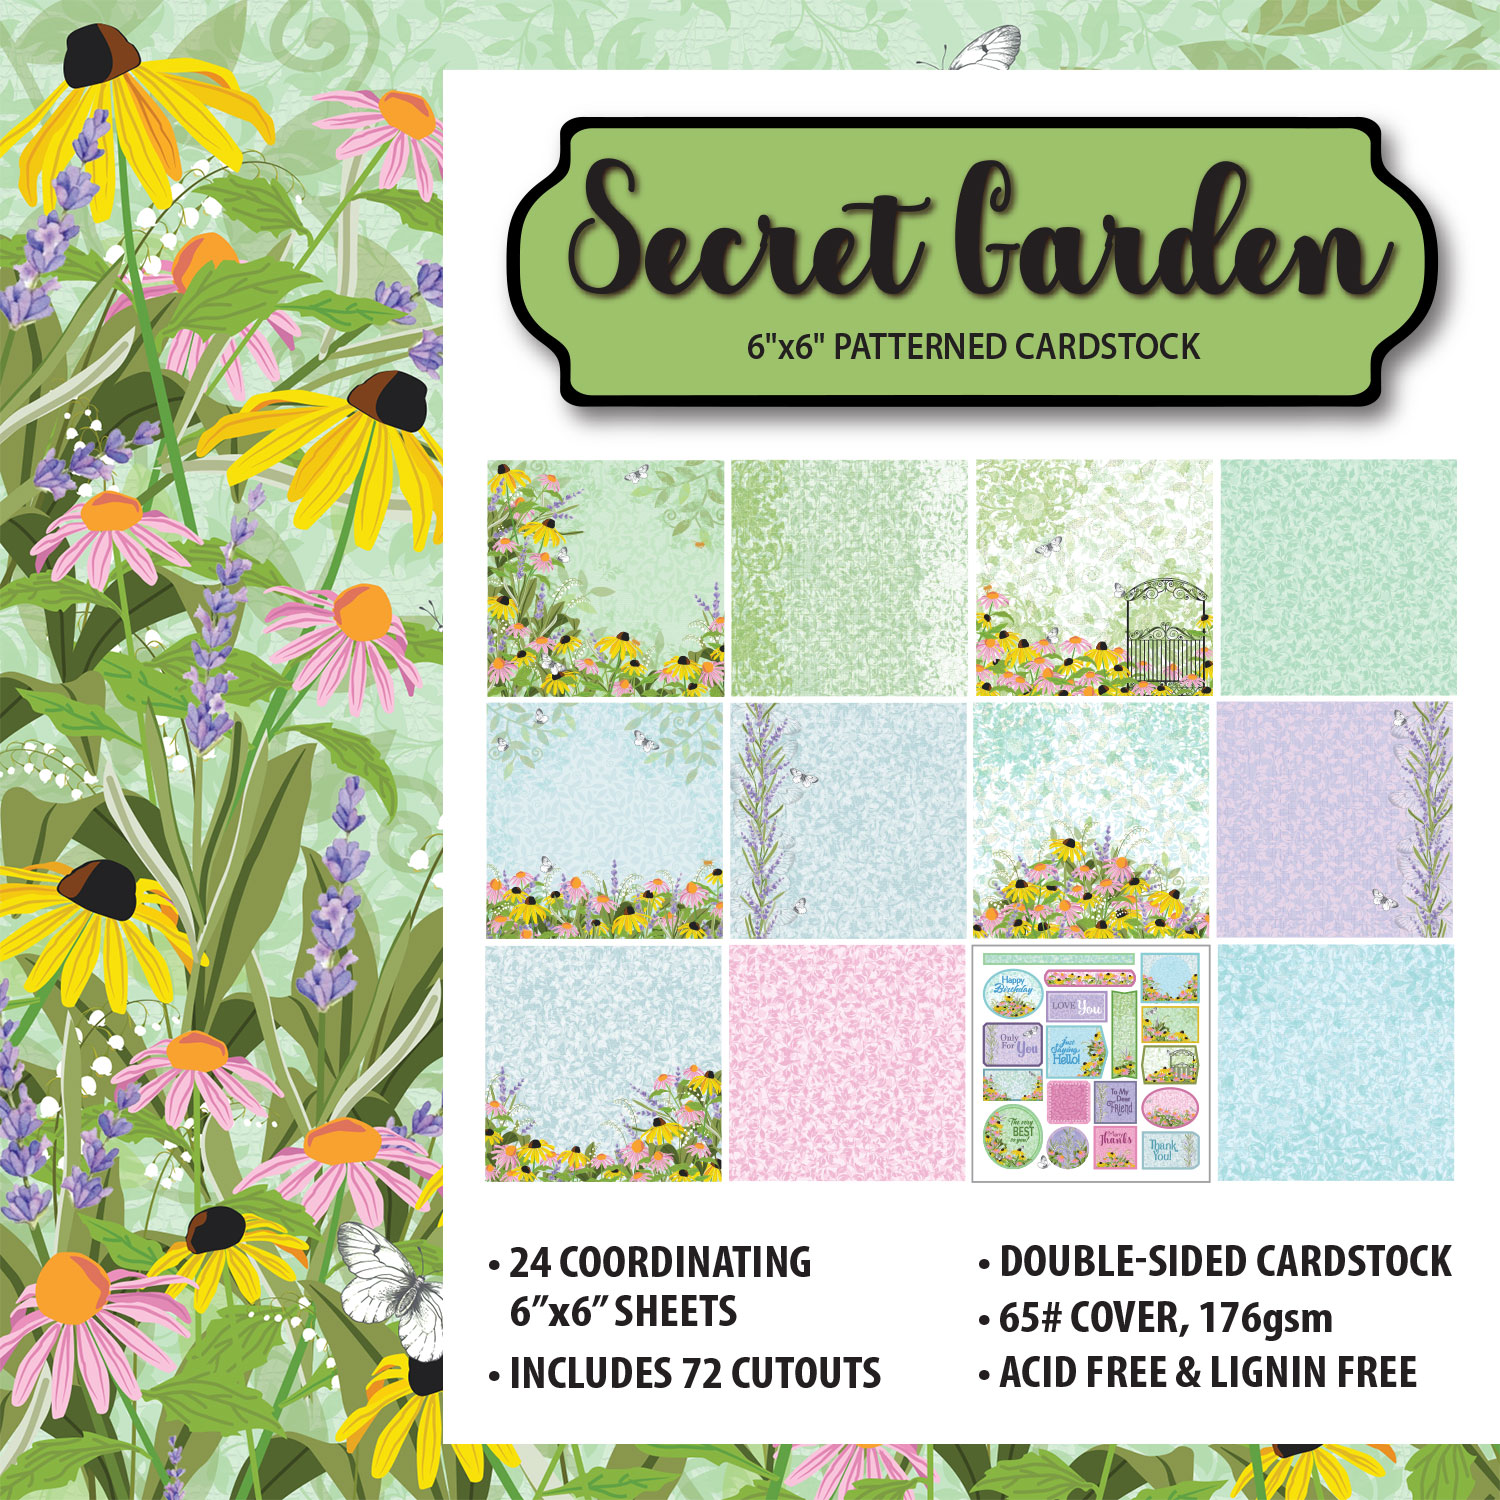 Secret Garden 6x6 Patterned Cardstock